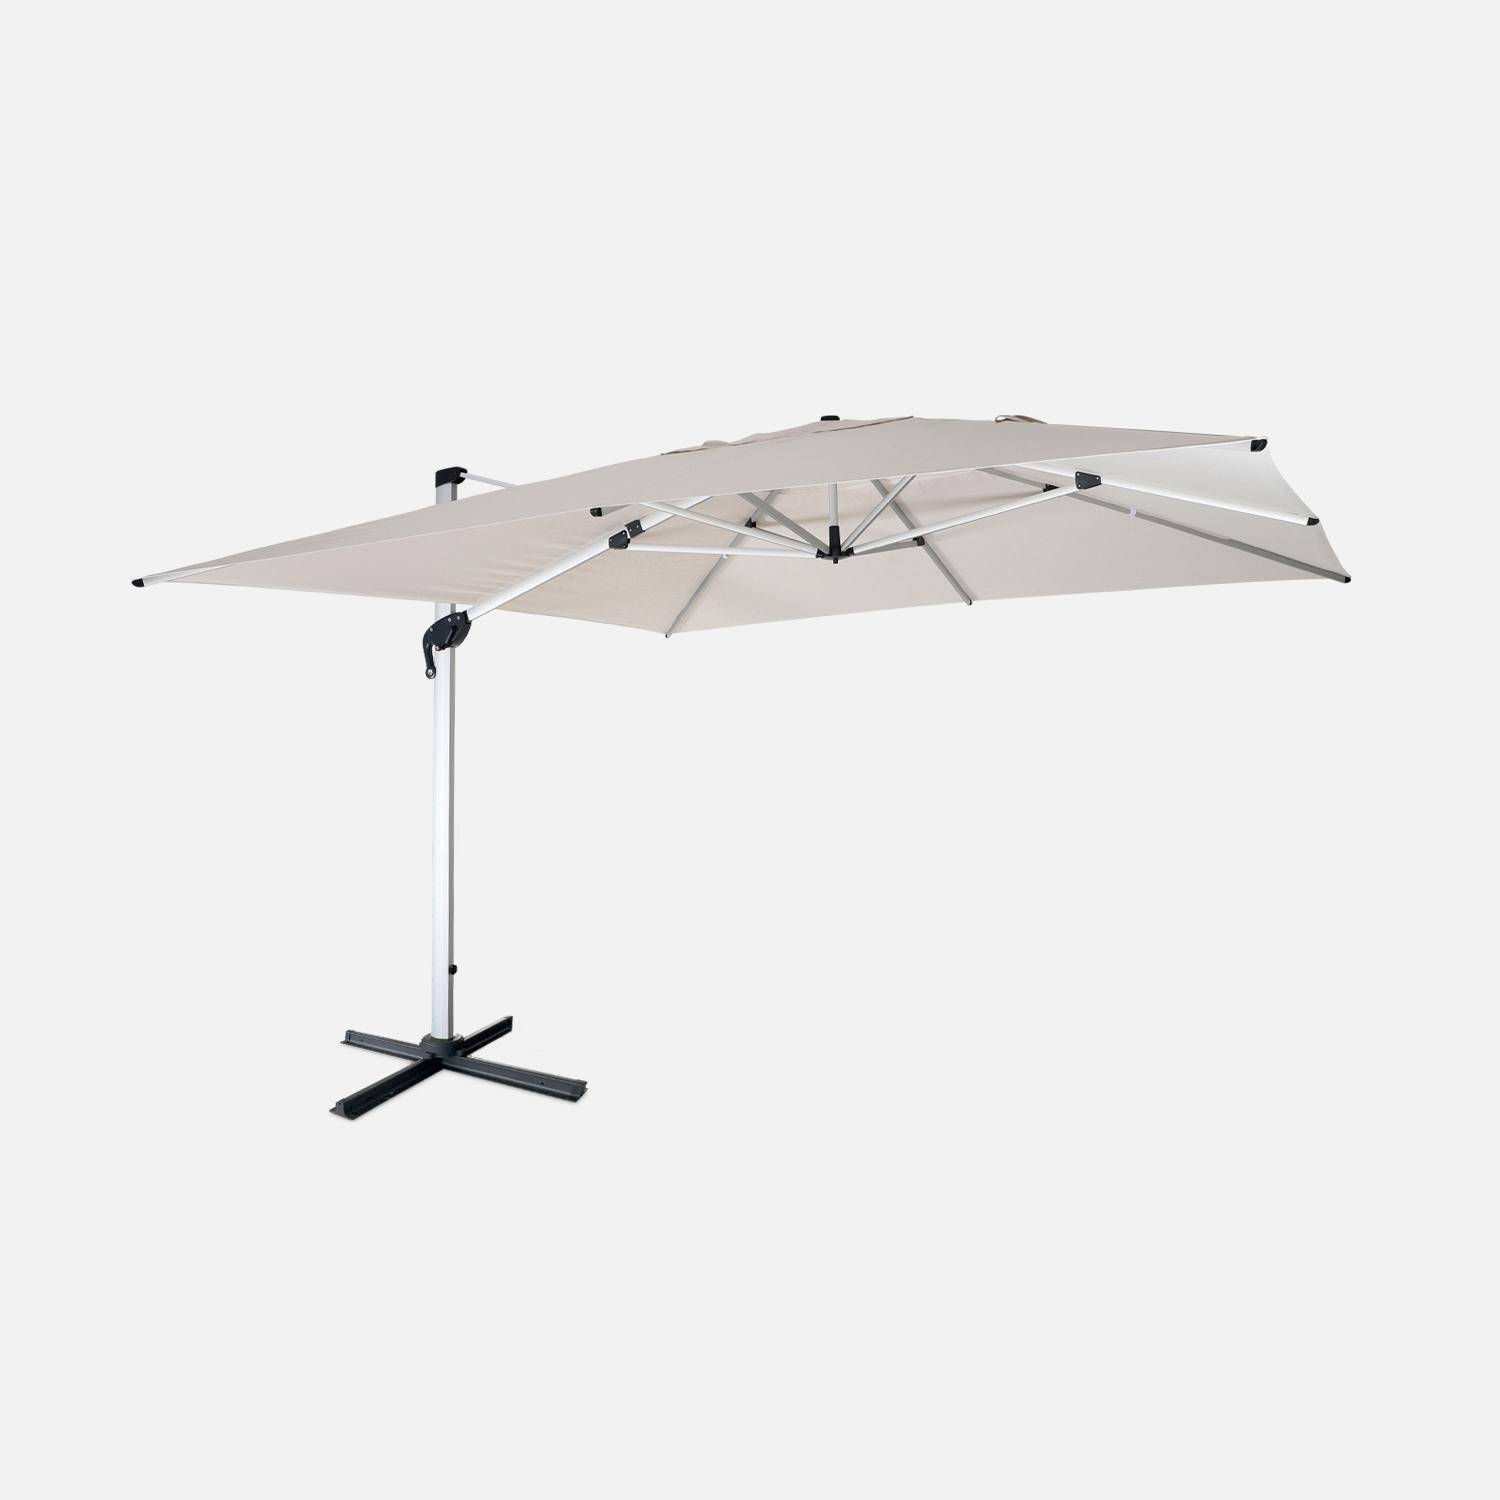 Topklasse parasol, 4x4m, beige polyester doek, geanodiseerd aluminium frame, hoes inbegrepen Photo1